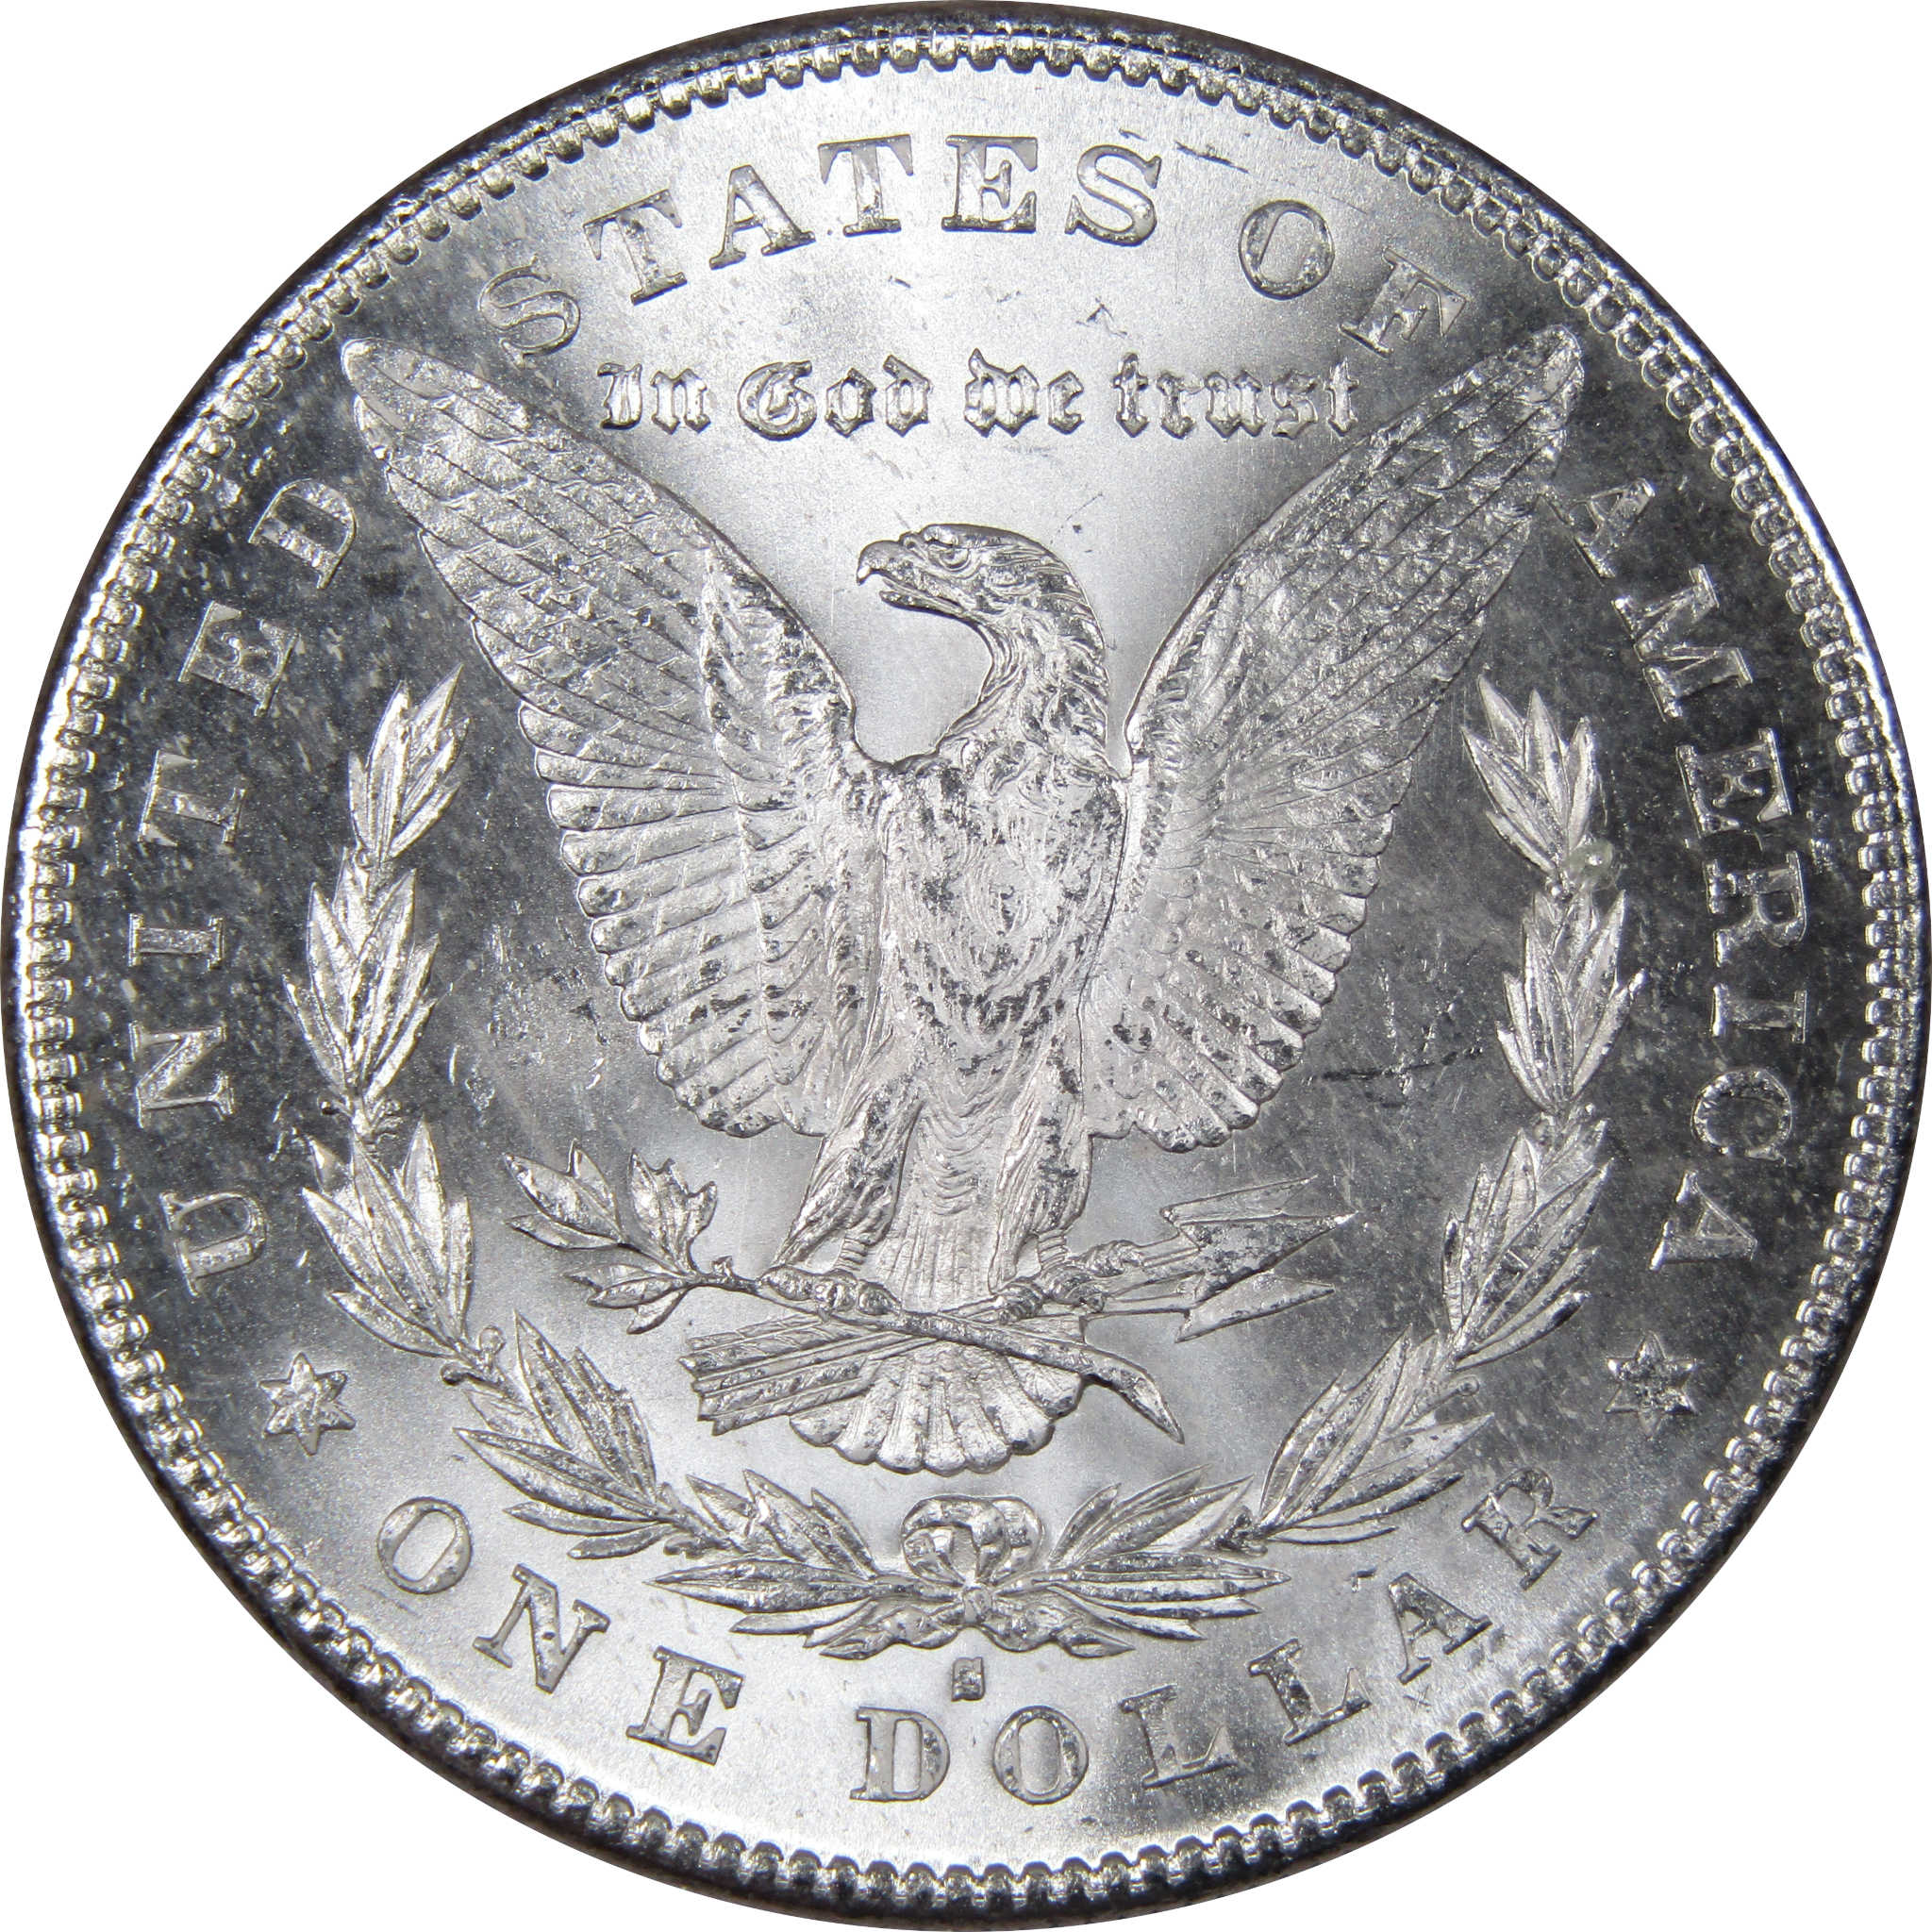 1878 S Morgan Dollar BU Uncirculated Mint State 90% Silver SKU:IPC8883 - Morgan coin - Morgan silver dollar - Morgan silver dollar for sale - Profile Coins &amp; Collectibles